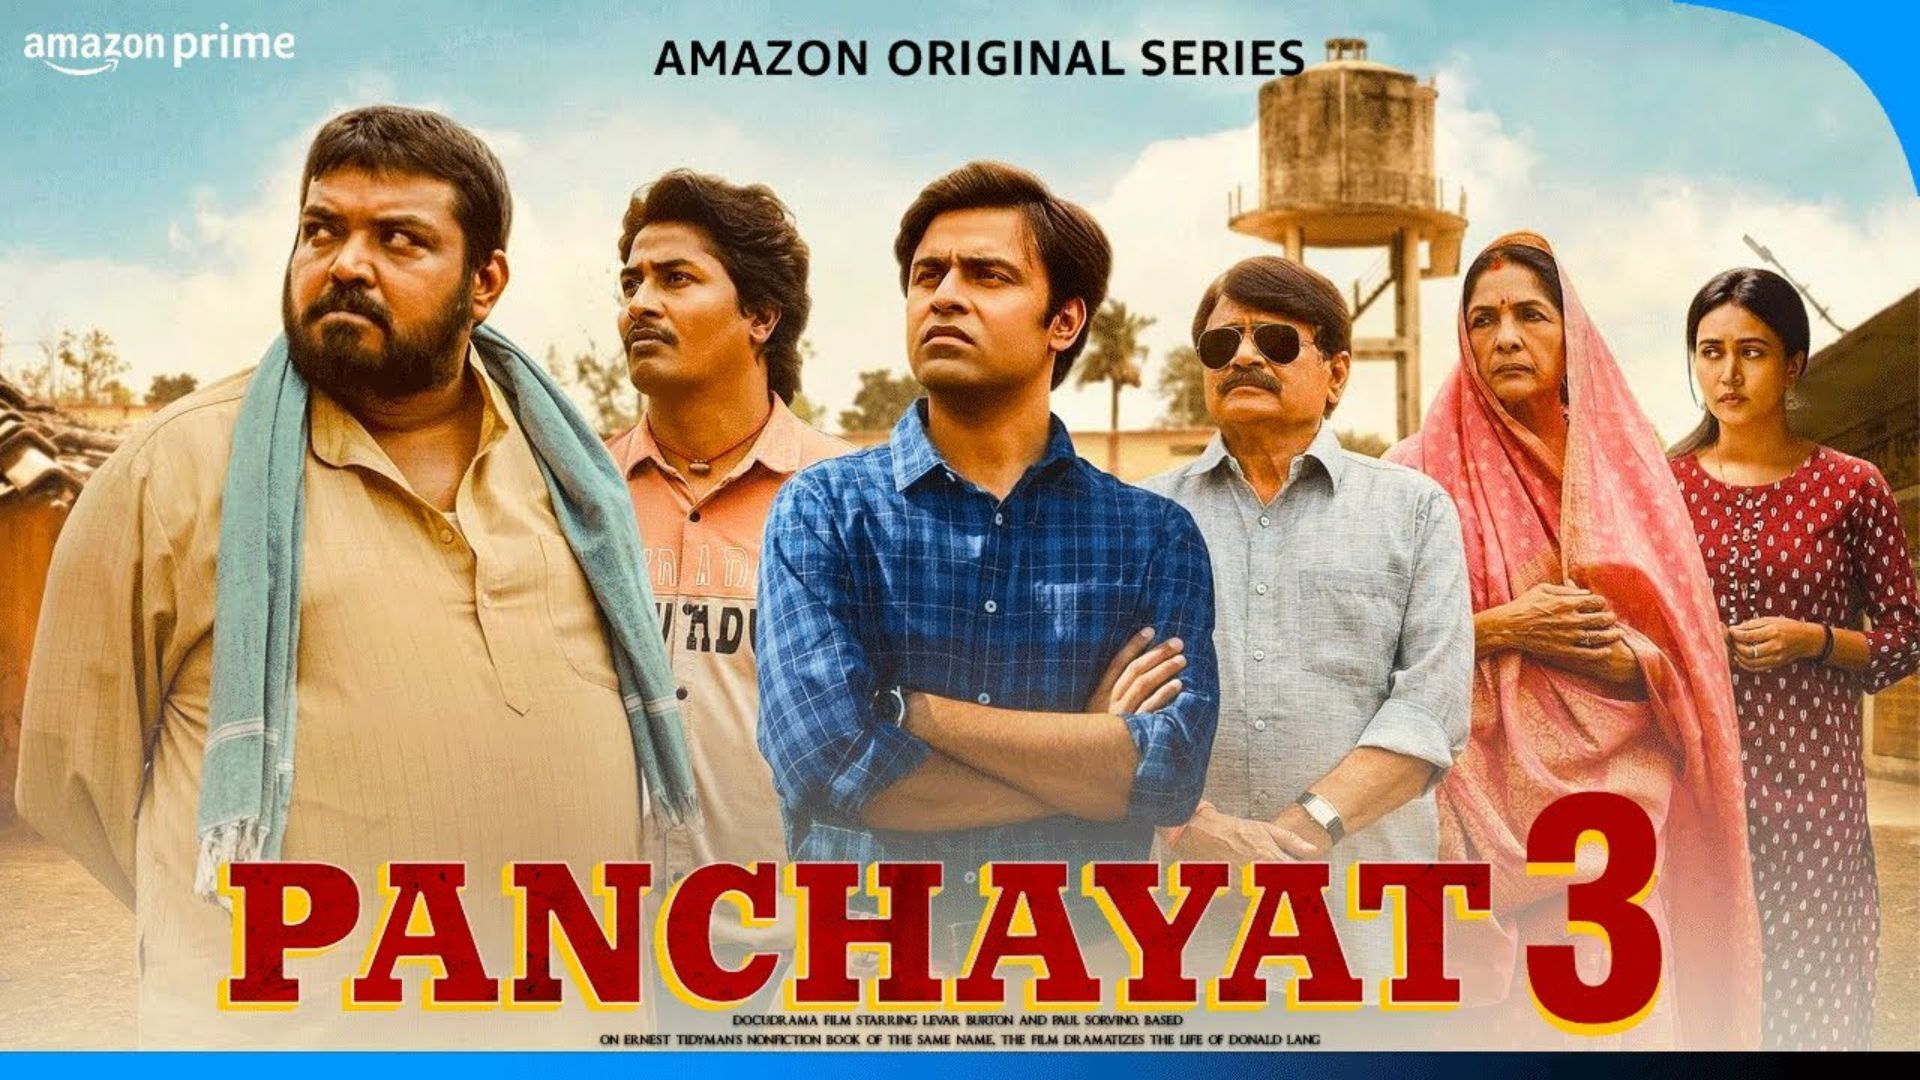 ‘Panchayat Season 3’ stars Jitendra Kumar and Neena Gupta announced! Check out the poster